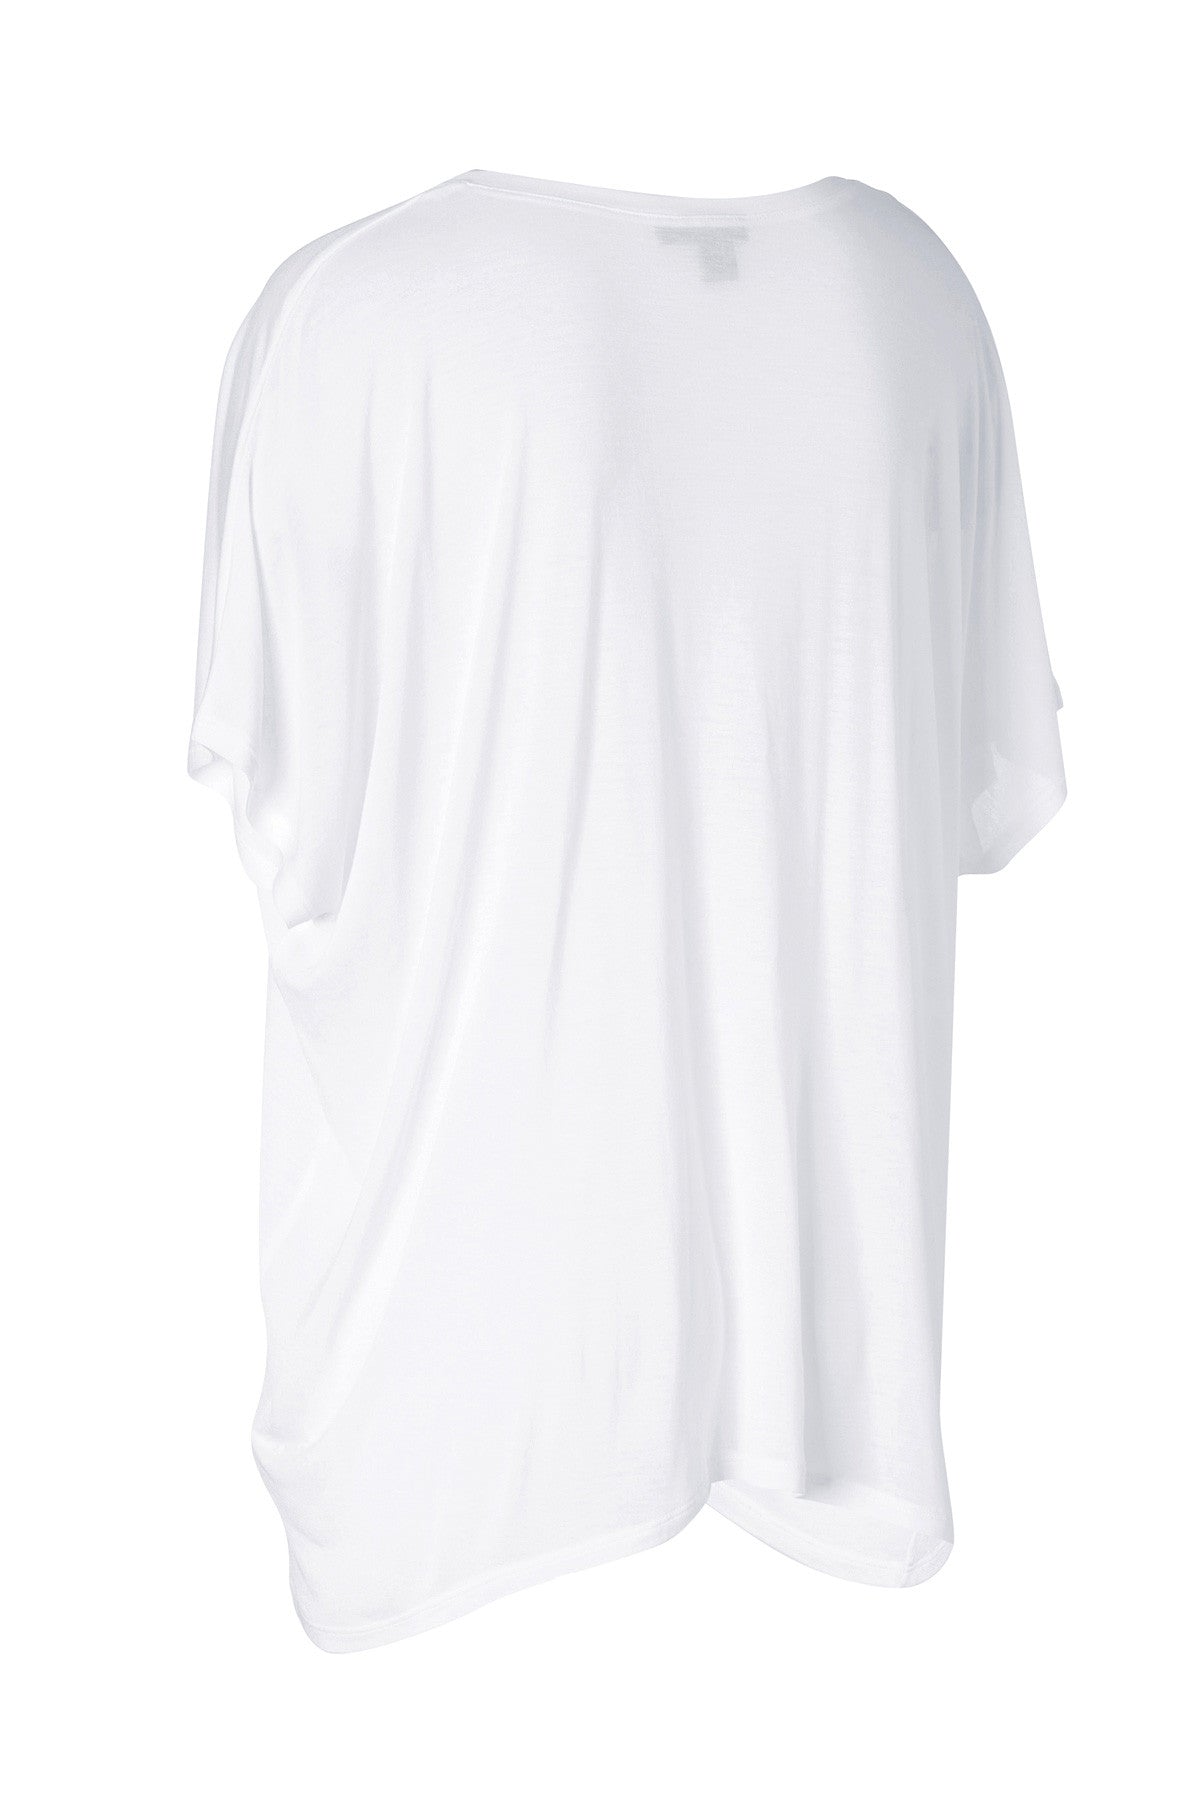 Basic Jersey Oversized T-Shirt in White & Black Asymmetric Cut for Women